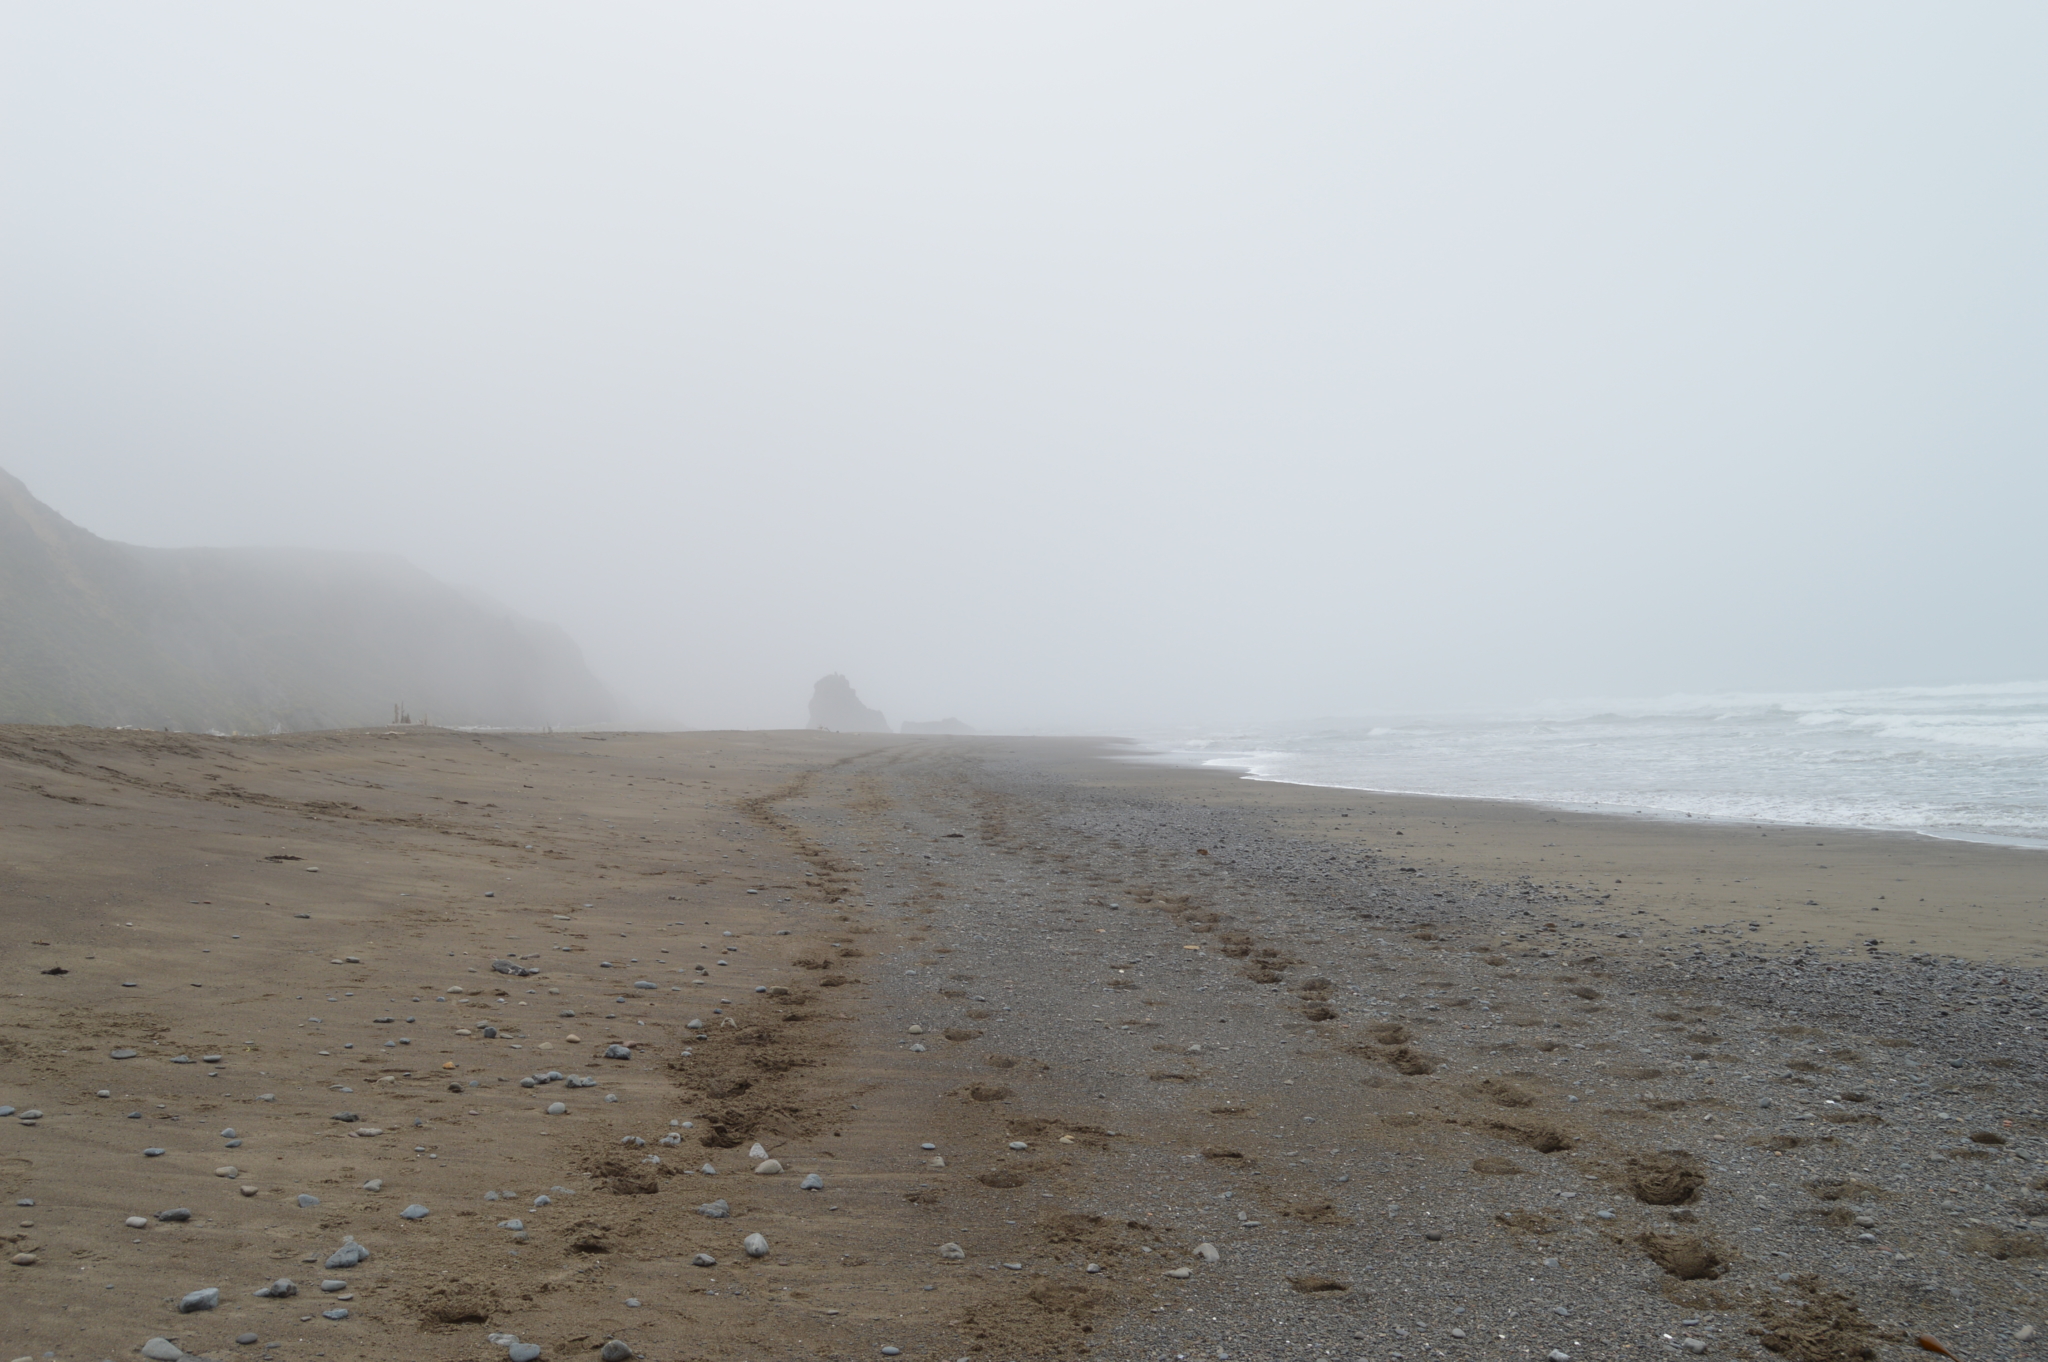 Footprints on a Northern California beach on a foggy day